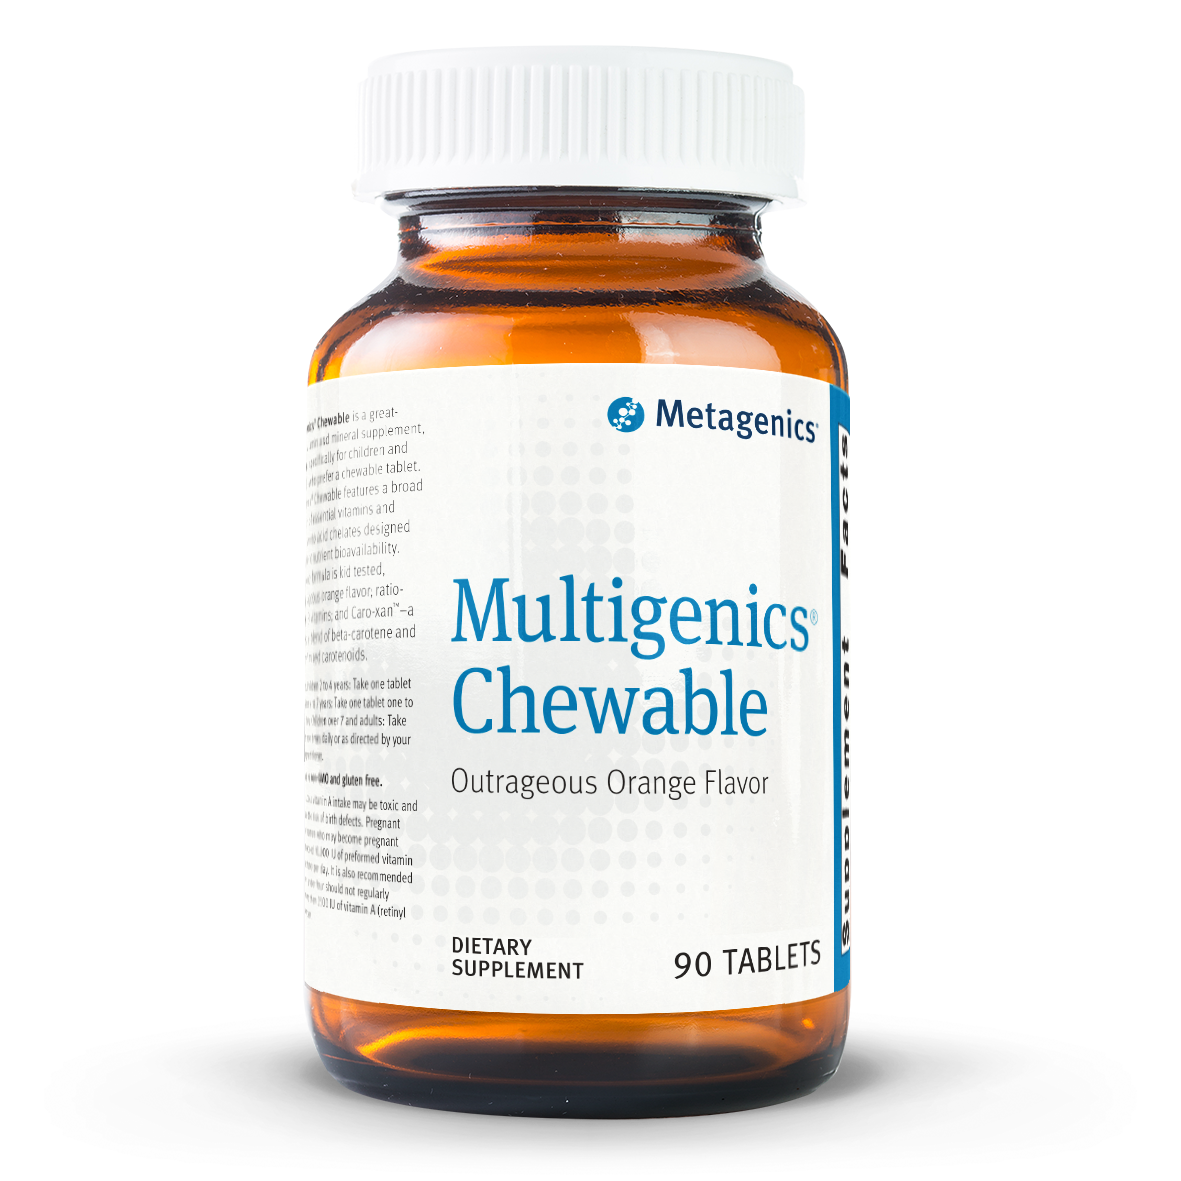 Metagenics Multigenics Chewable